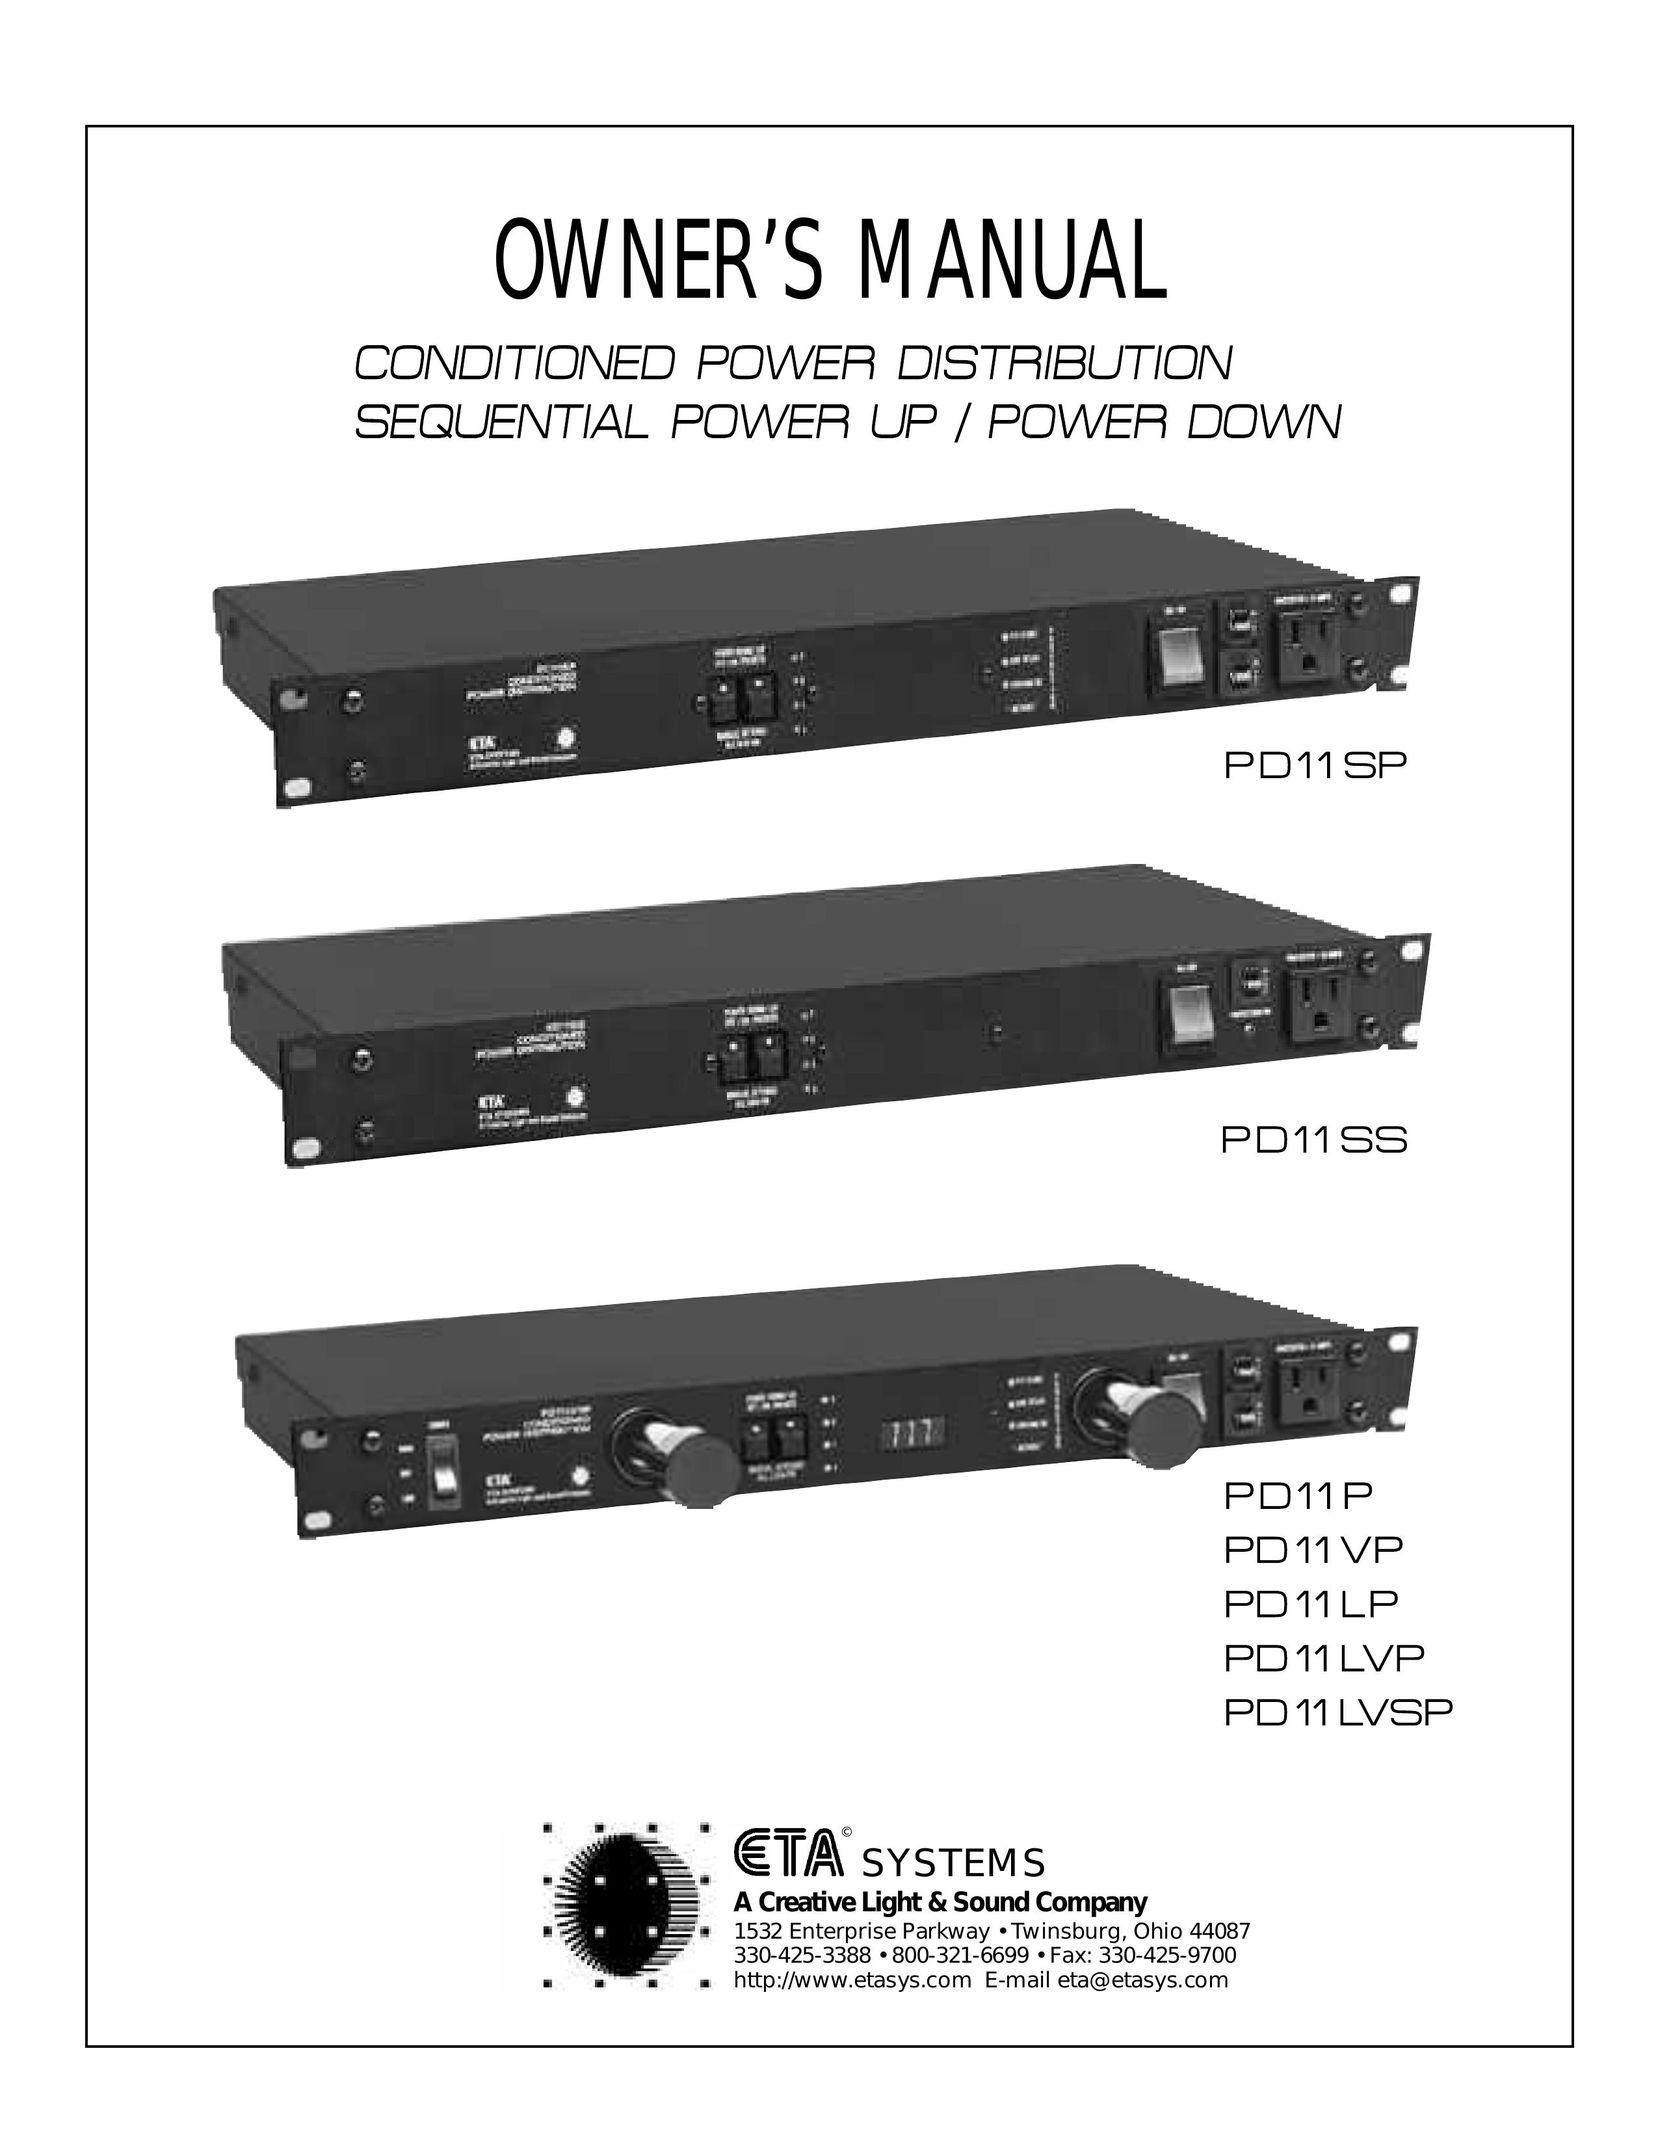 ETA Systems PD11LVP Power Supply User Manual